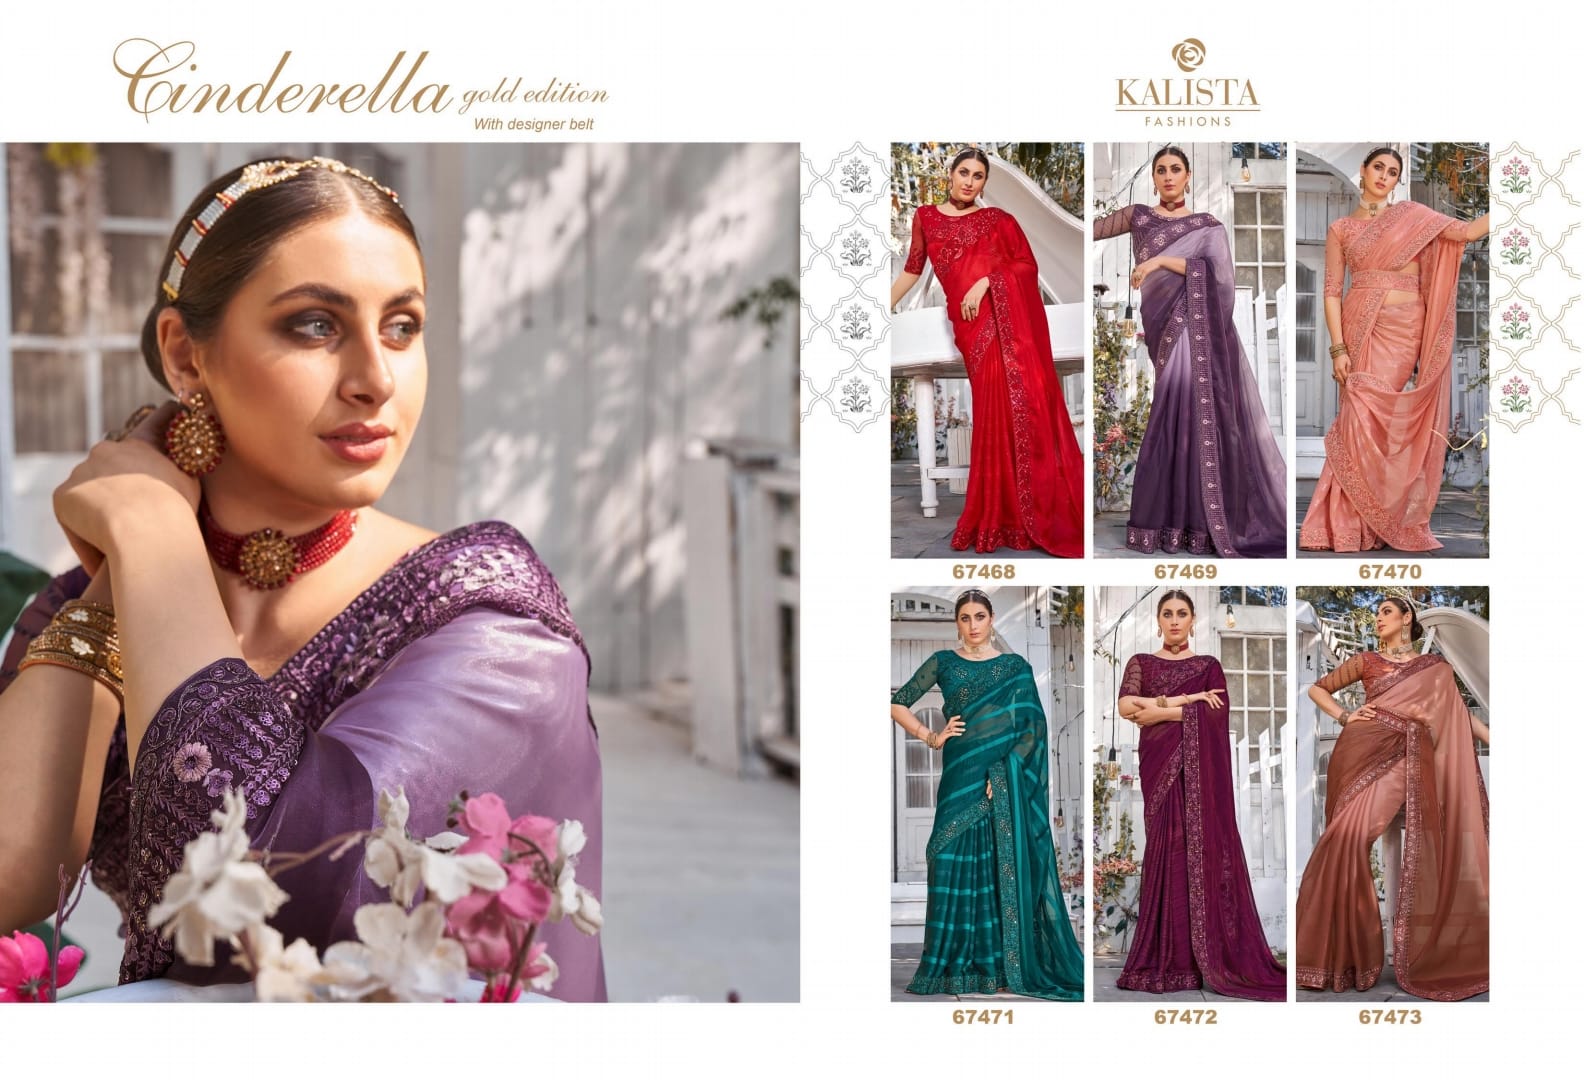 Kalista Fashion Cinderella Gold Edition 67468-67473